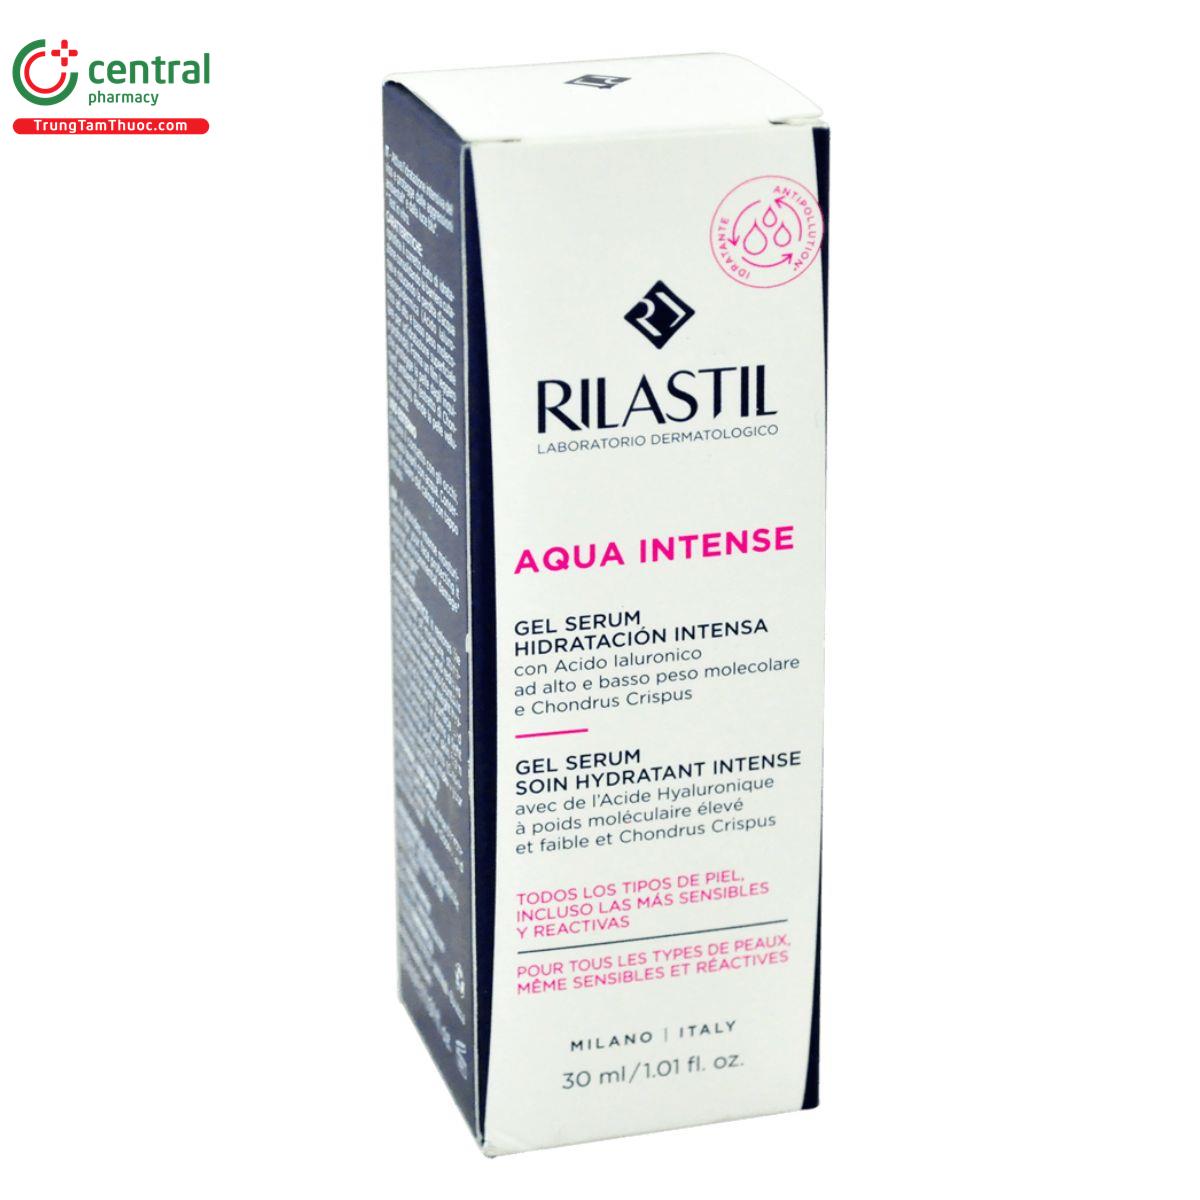 rilastil aqua intense gel serum soin hydratant intense 2 O5275